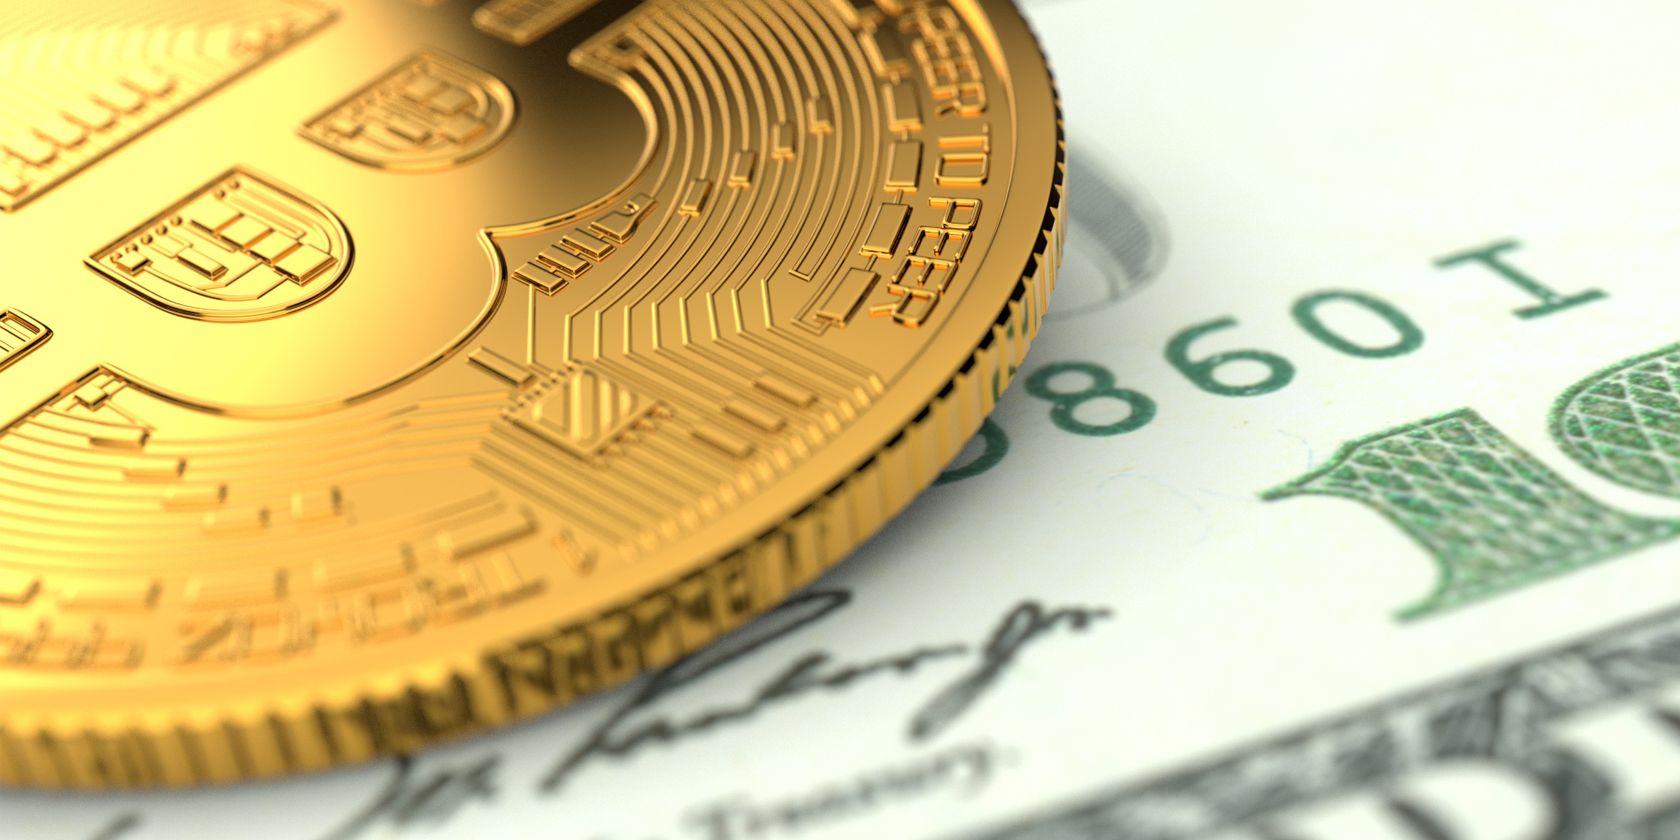 Bitcoin placed over a US dollar